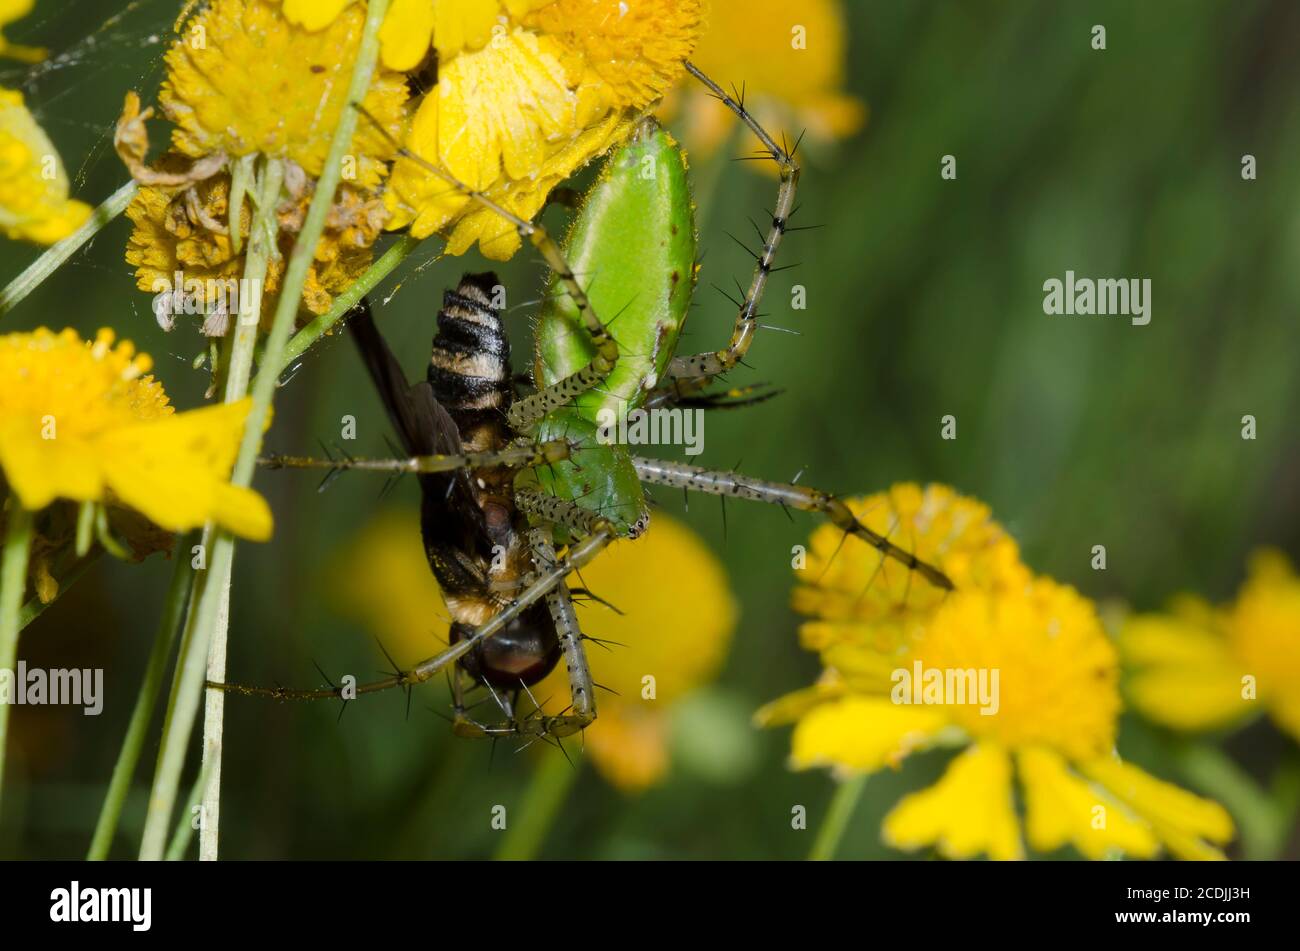 Green Lynx Spider, Peucetia viridans, feeding on captured Bee Fly, Family Bombyliidae, on Sneezeweed, Helenium amarum Stock Photo